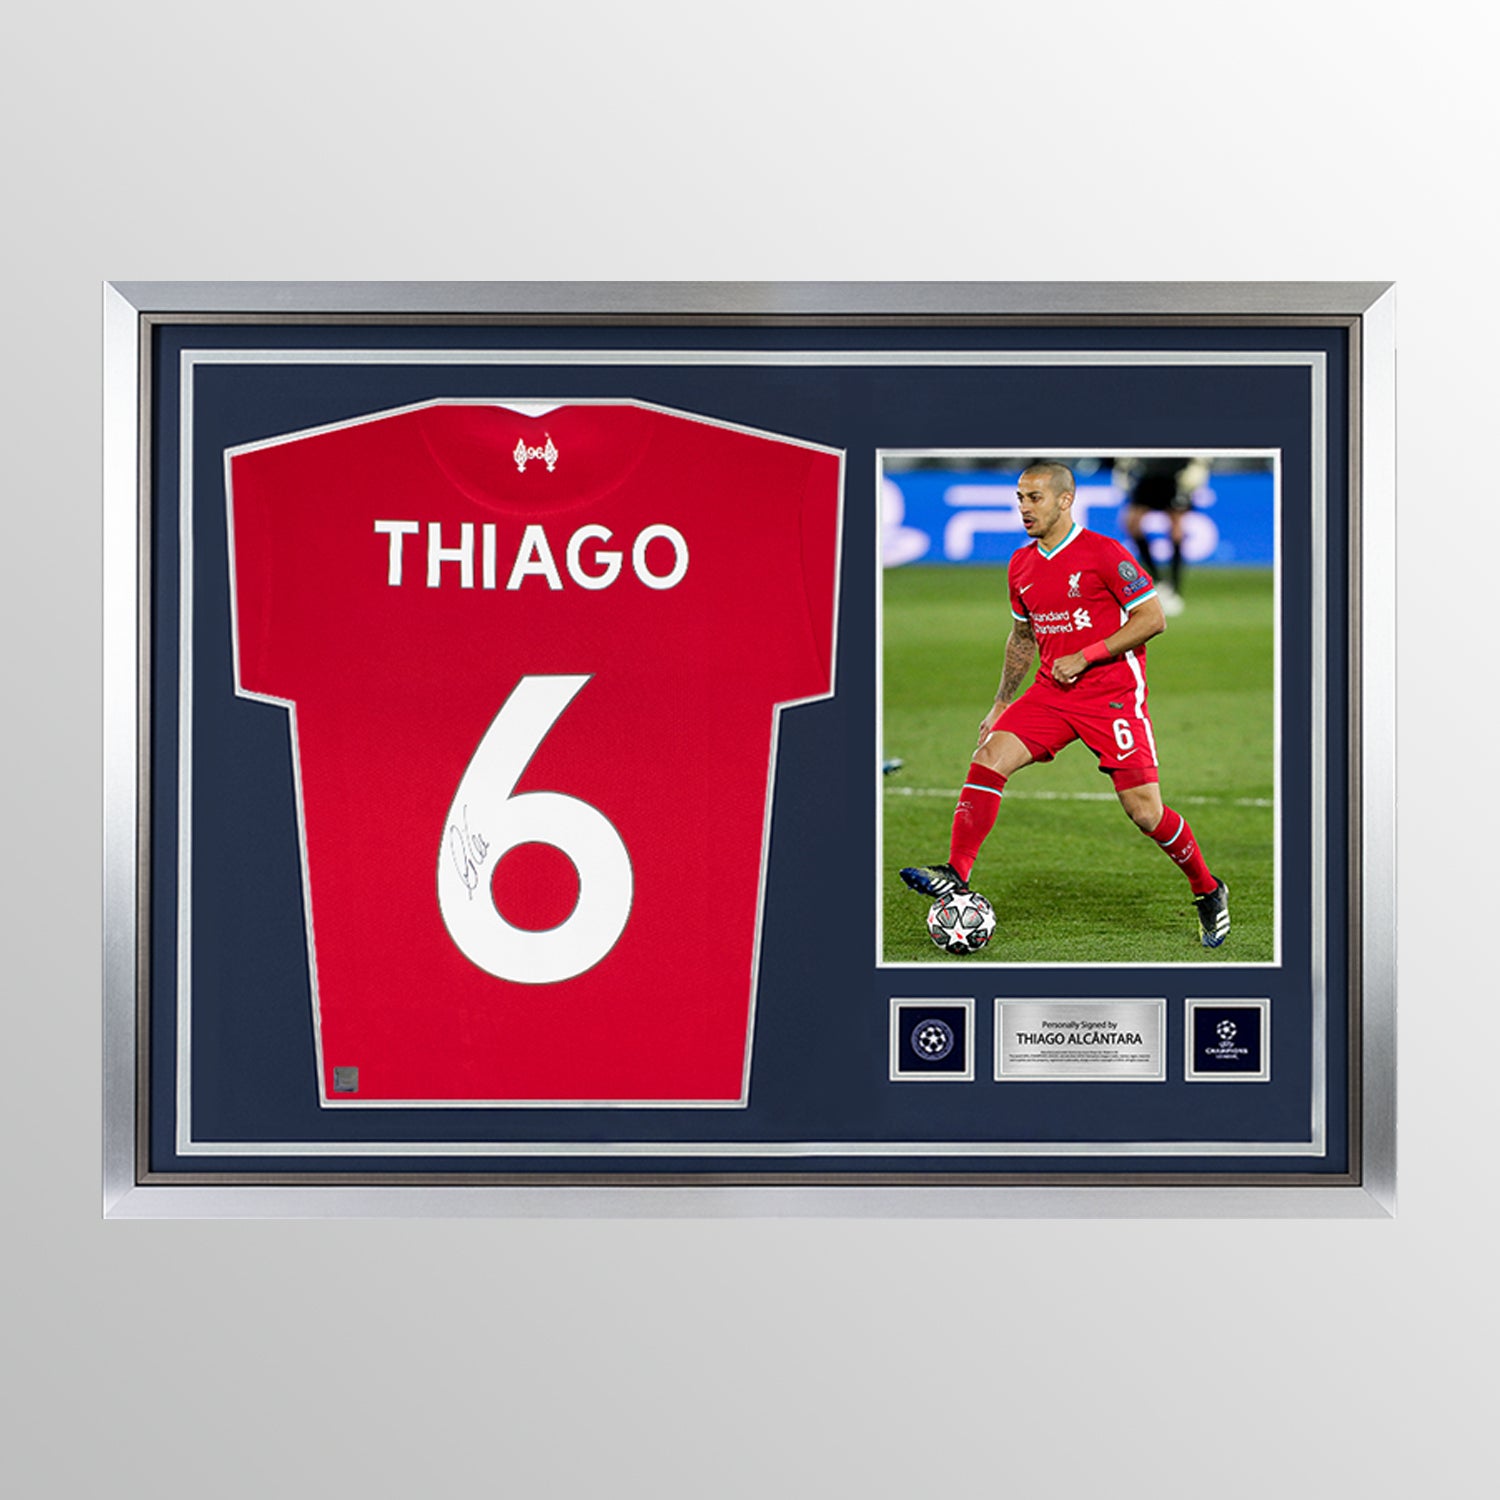 Thiago Alcântara - Thiago - Sticker